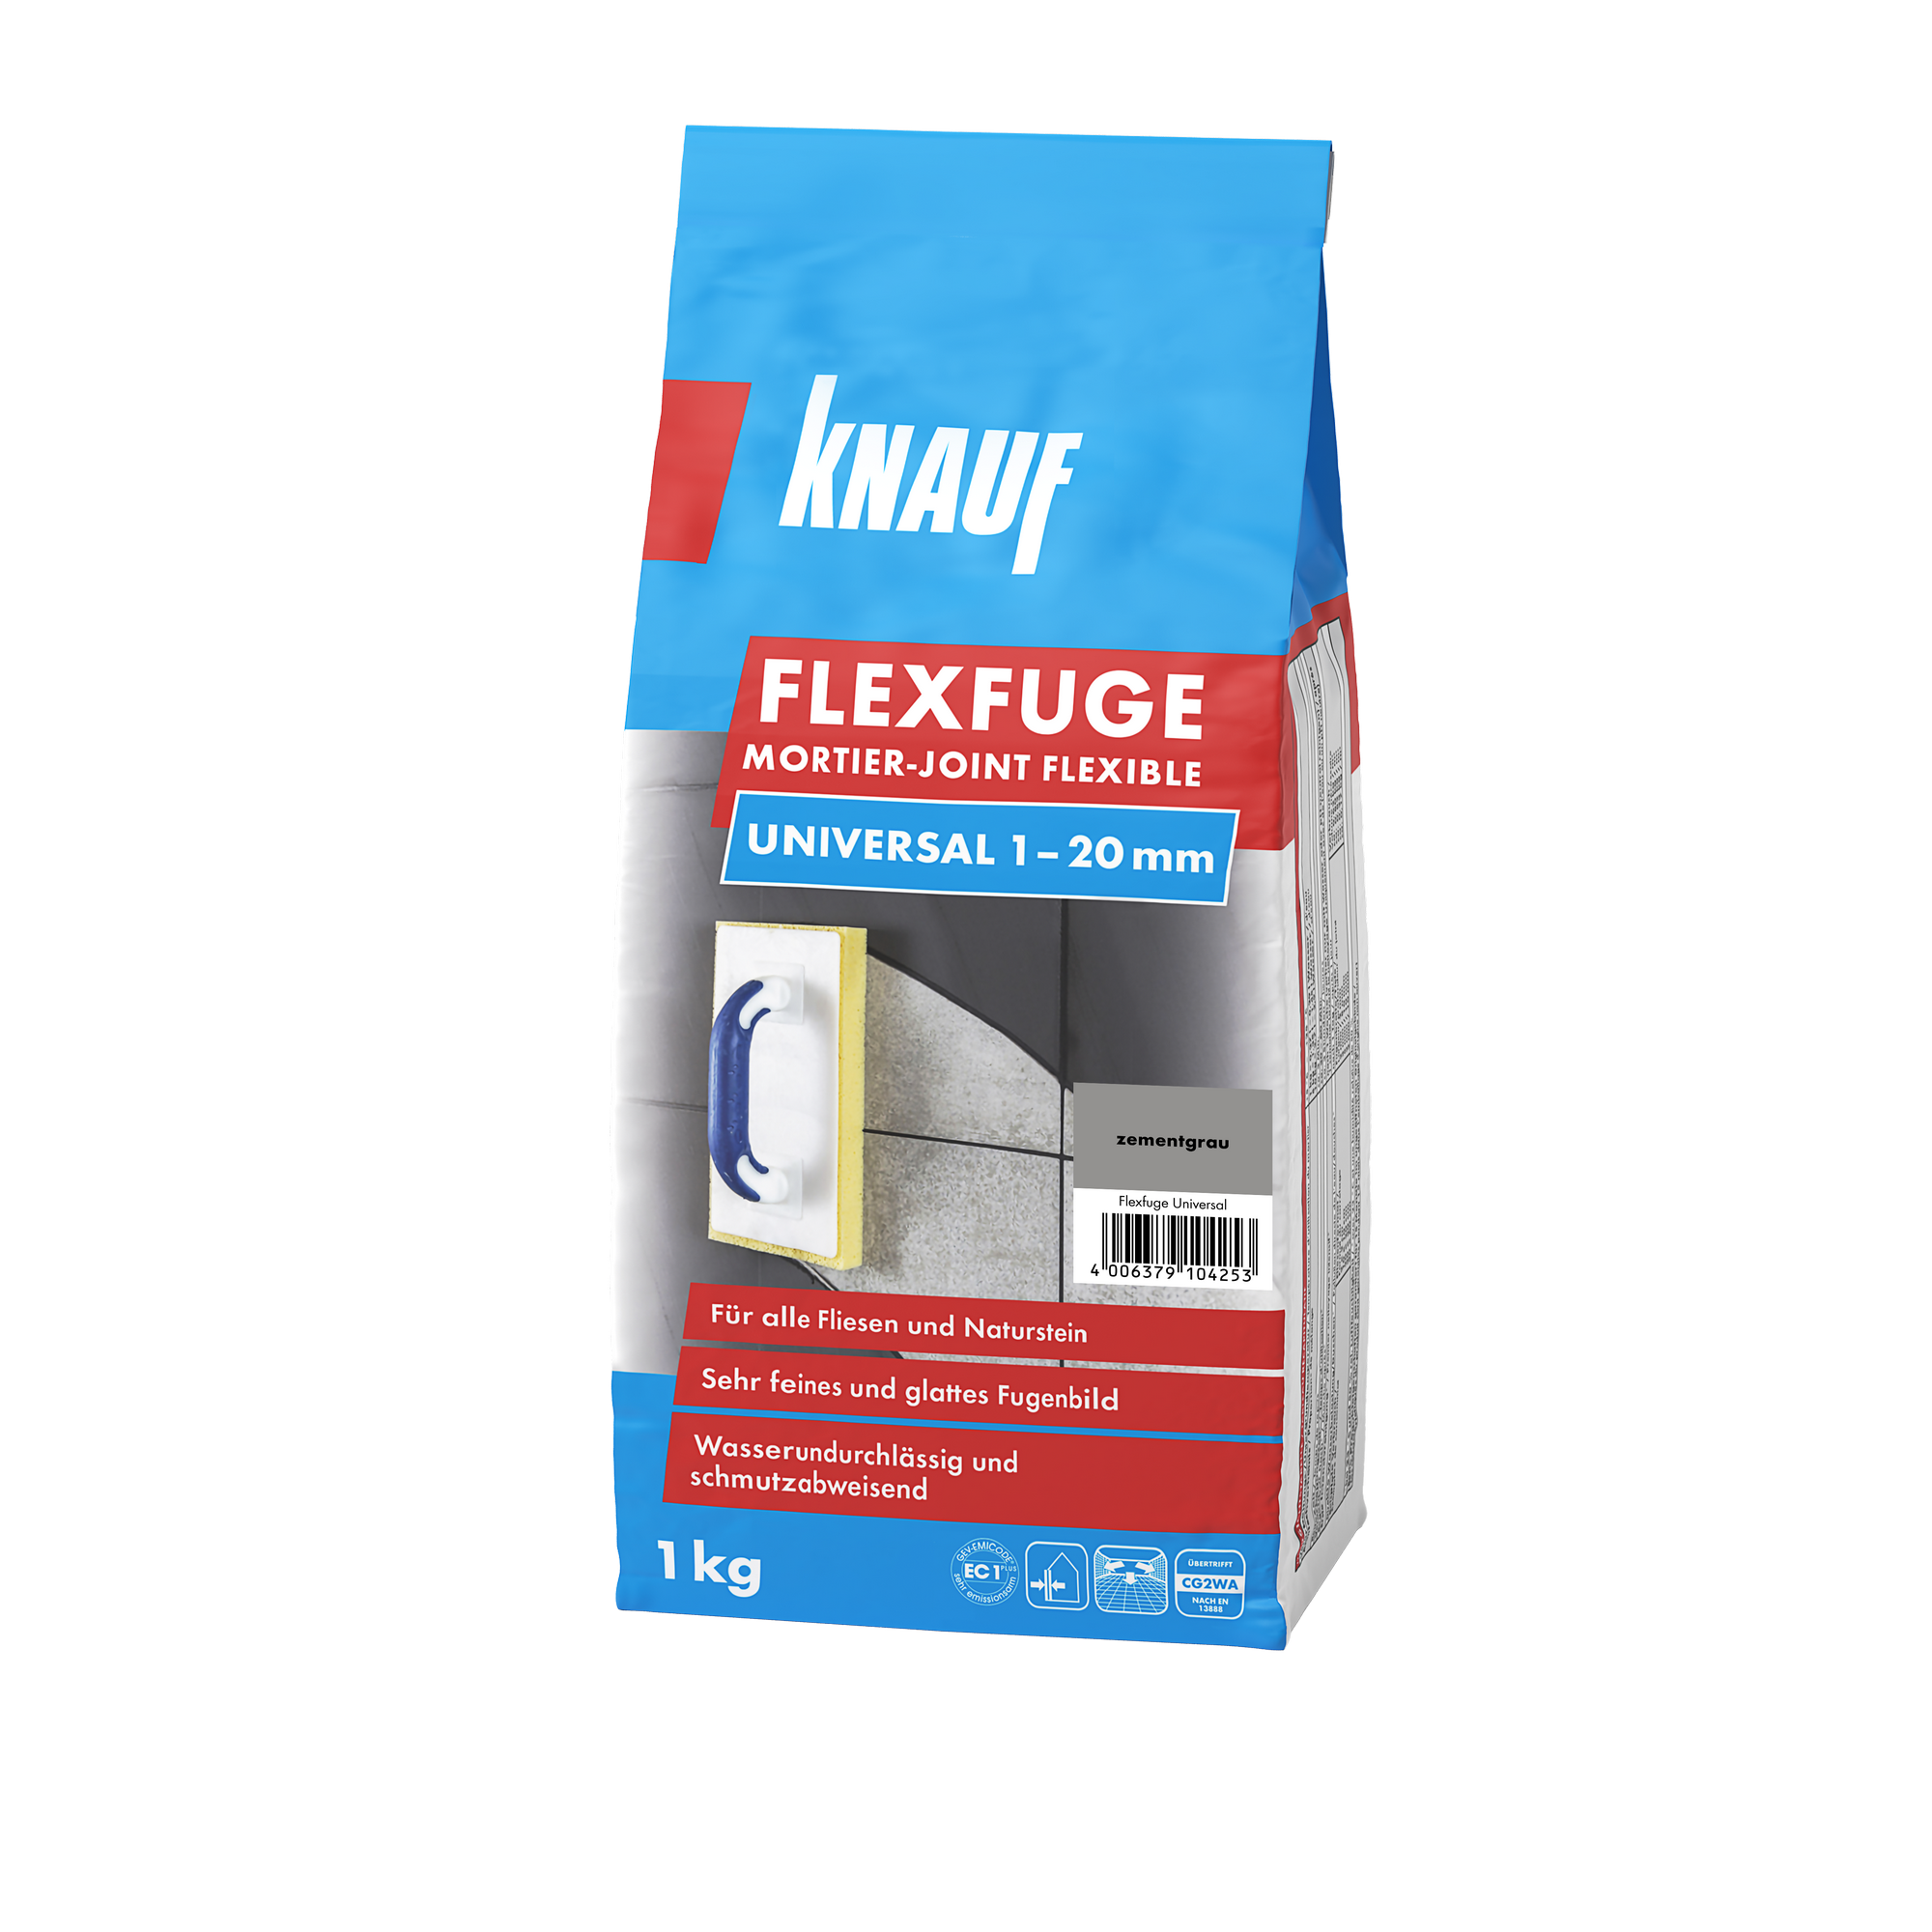 Flexfuge 'Universal' zementgrau 1 kg + product picture